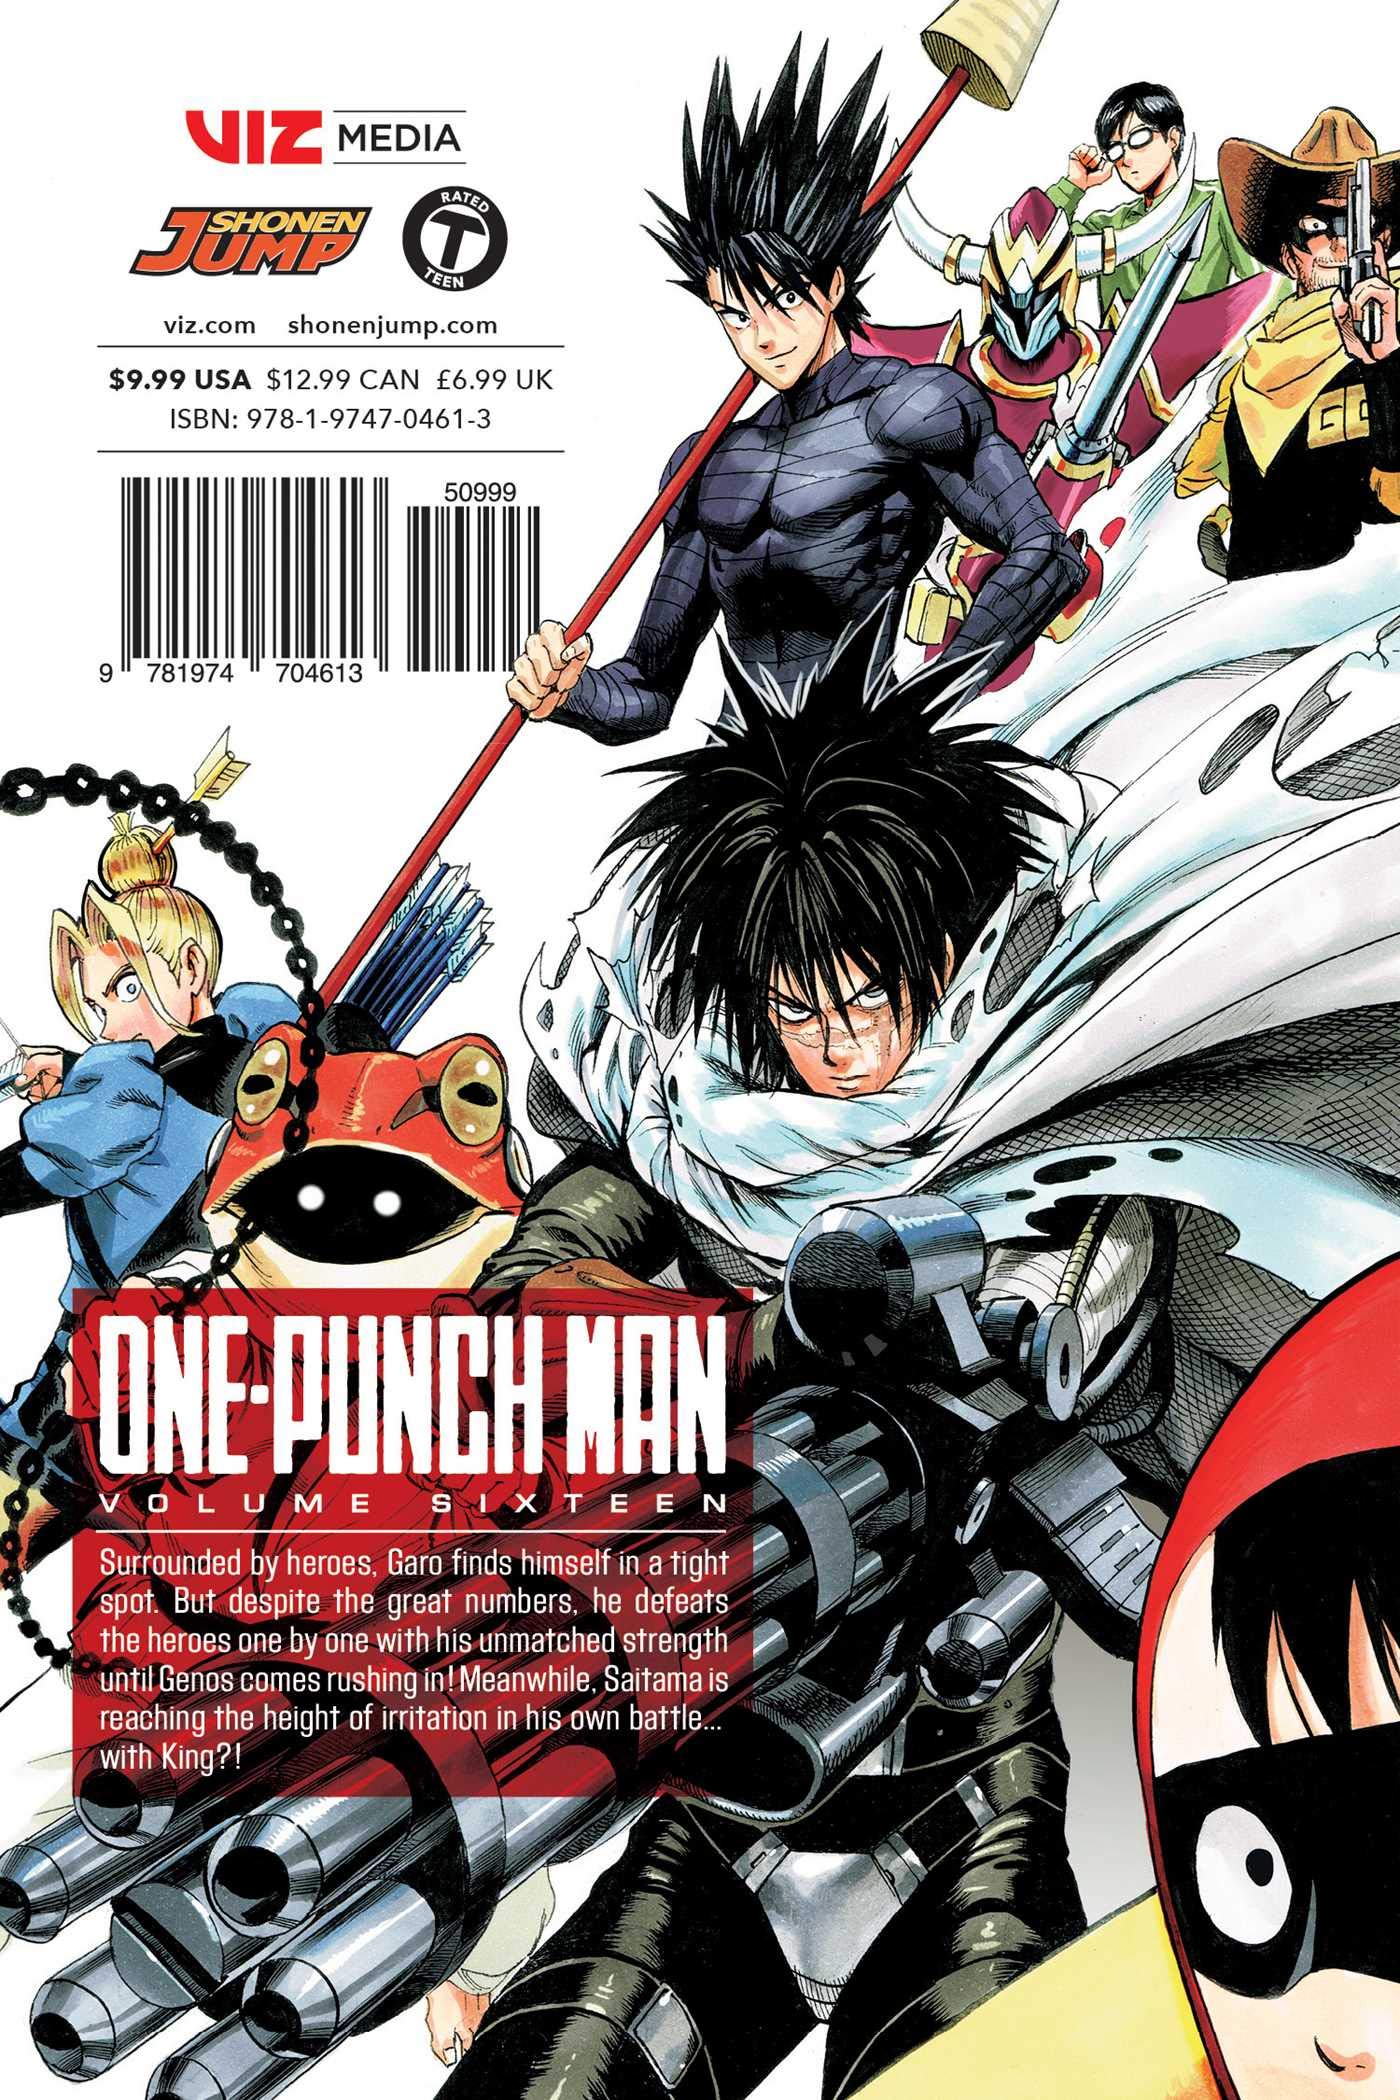 One Punch Man Vol.28 Japanese Manga Comic Book